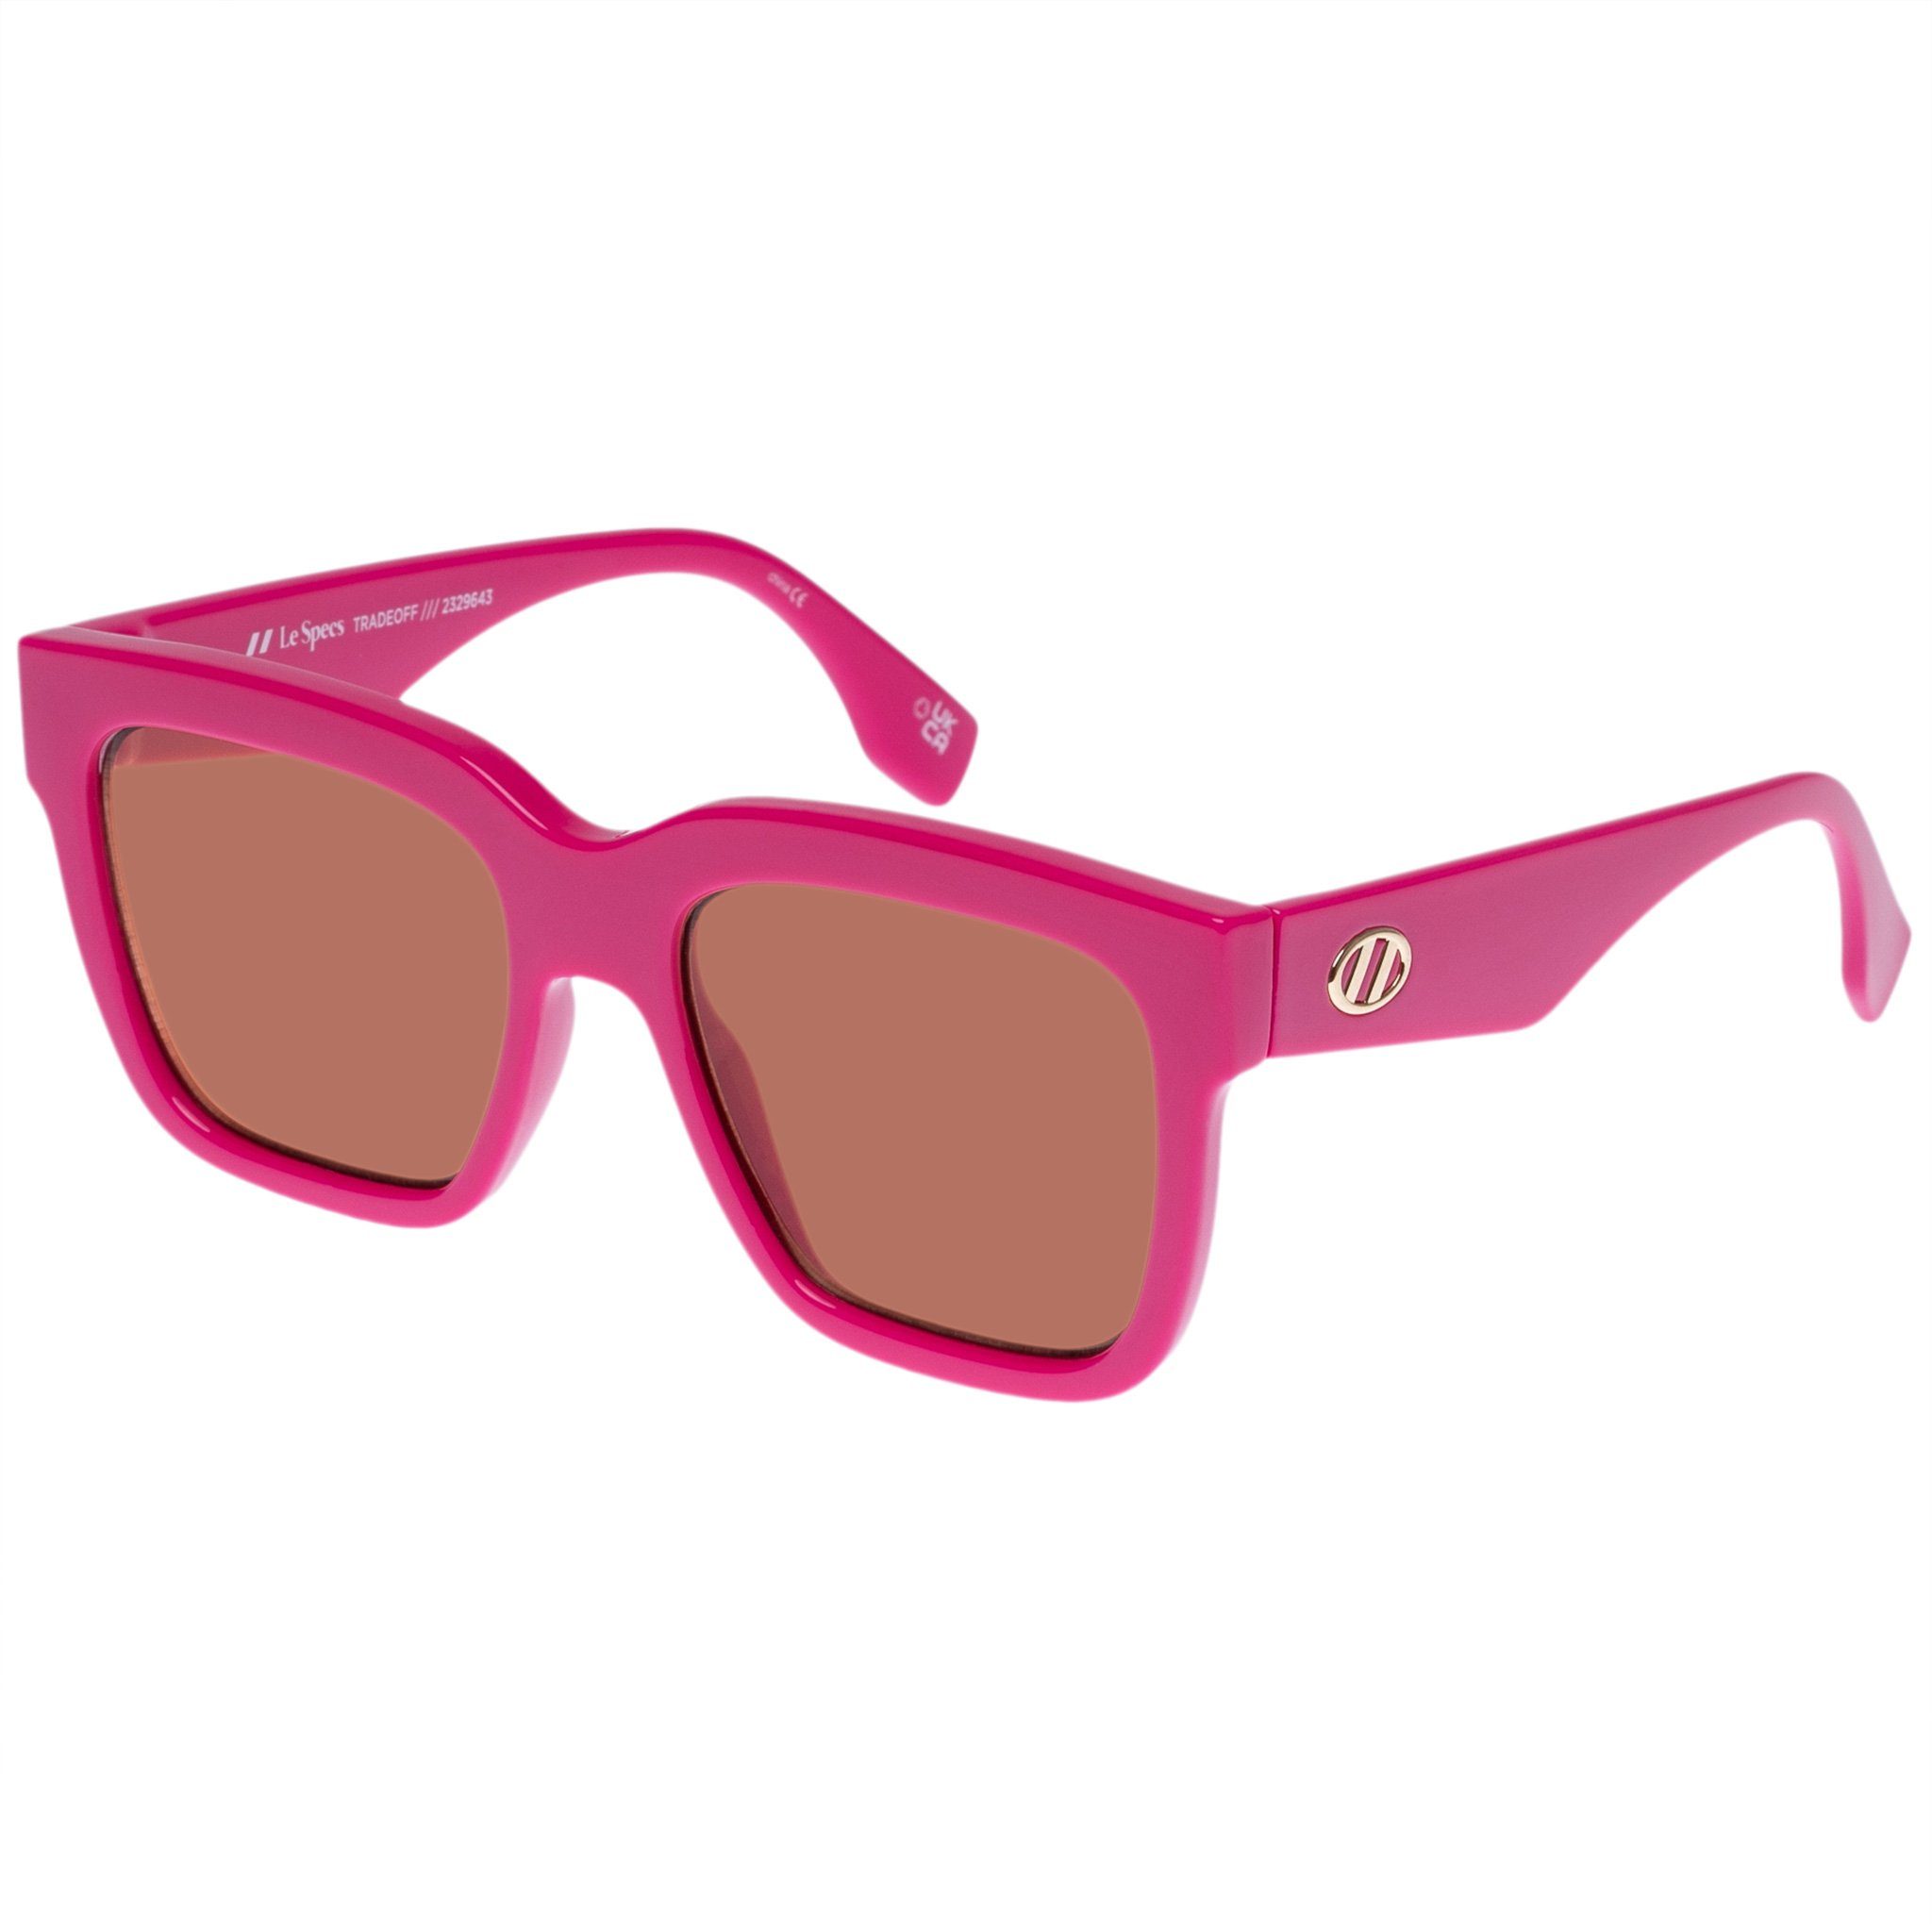 TRADEOFF Hot Pink SPECS Sonnenbrille LE